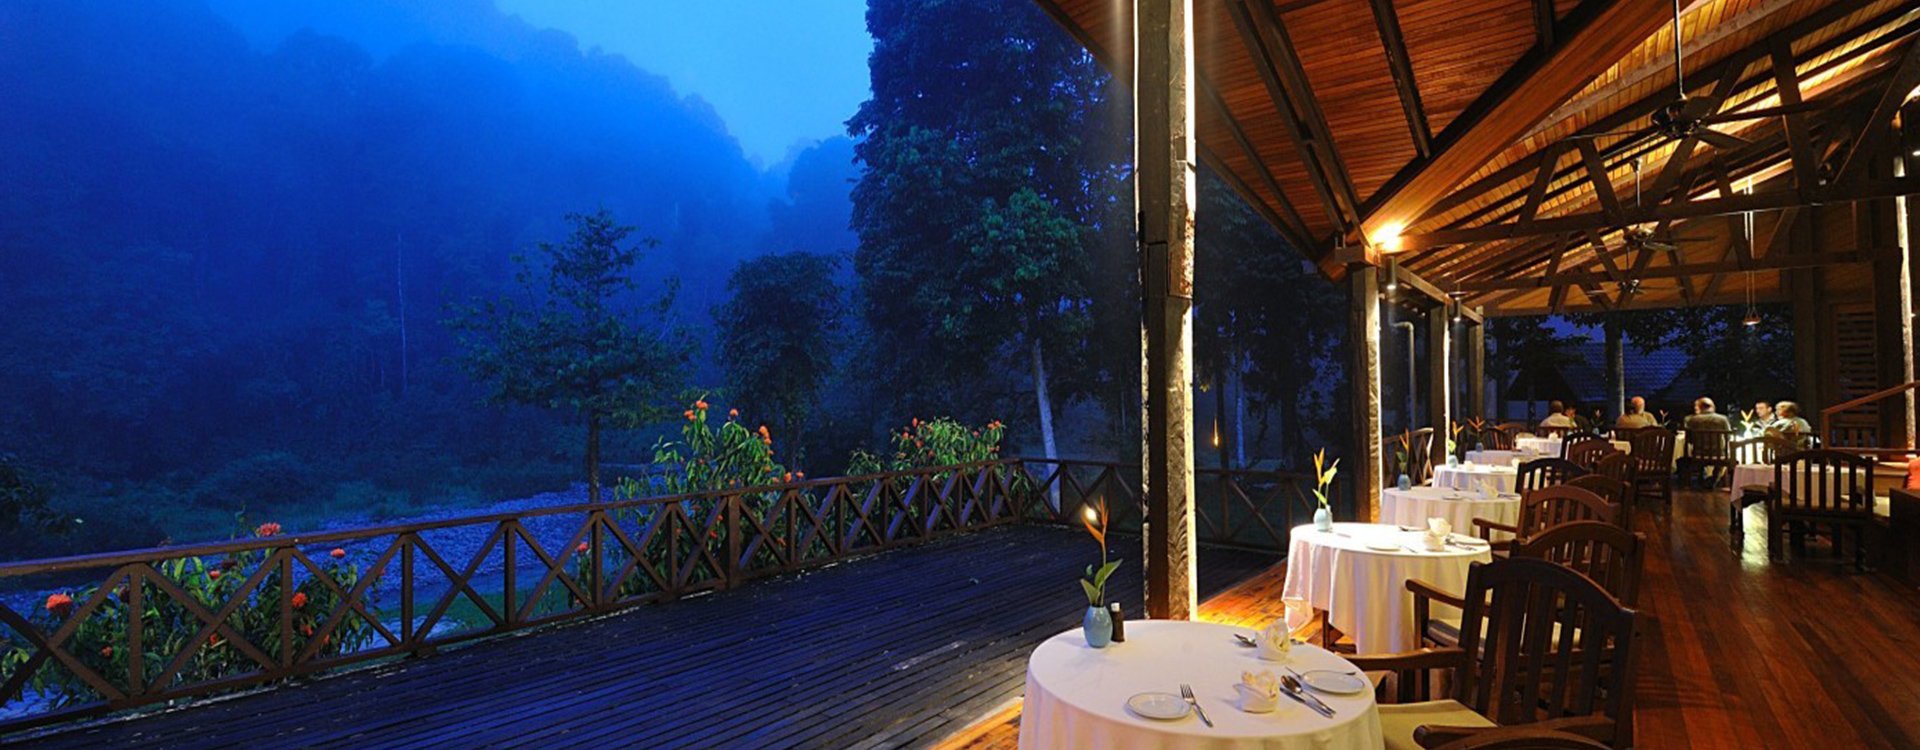 Borneo Rainforest Lodge_Restaurant_Dining